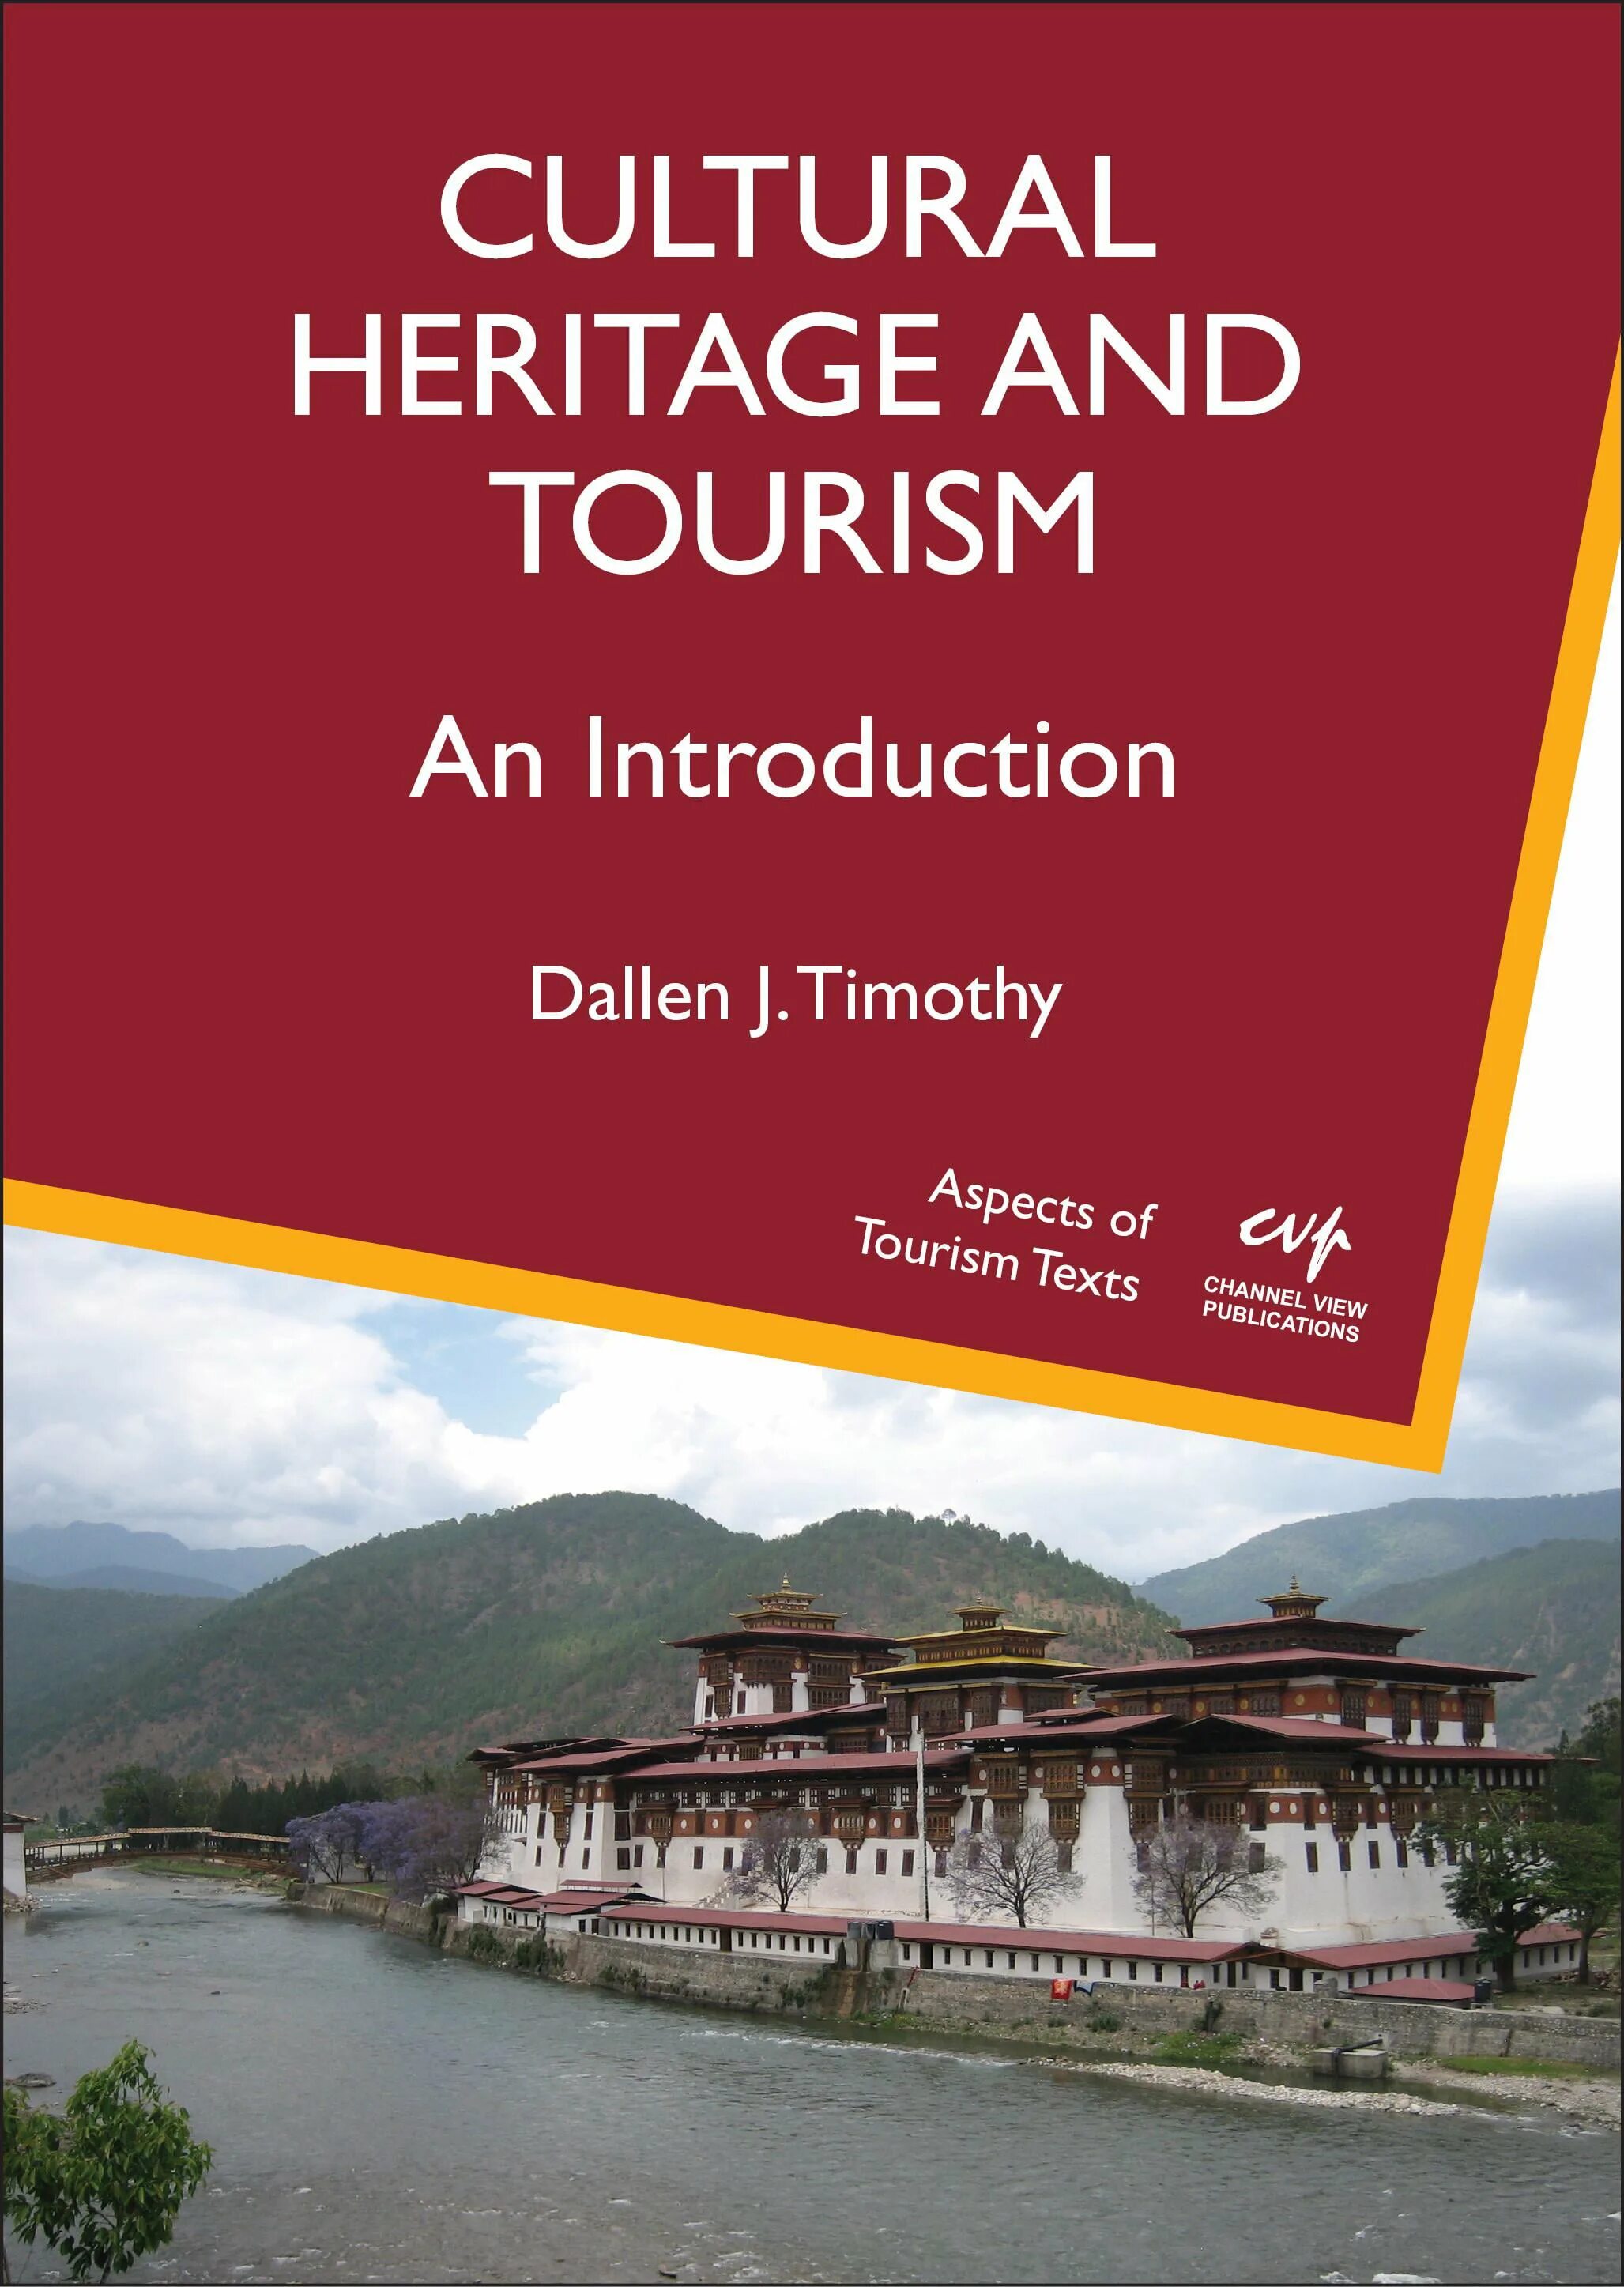 Heritage Tourism. World Tourism учебник. Cultural Heritage. Cover book Tourism. Tourism book